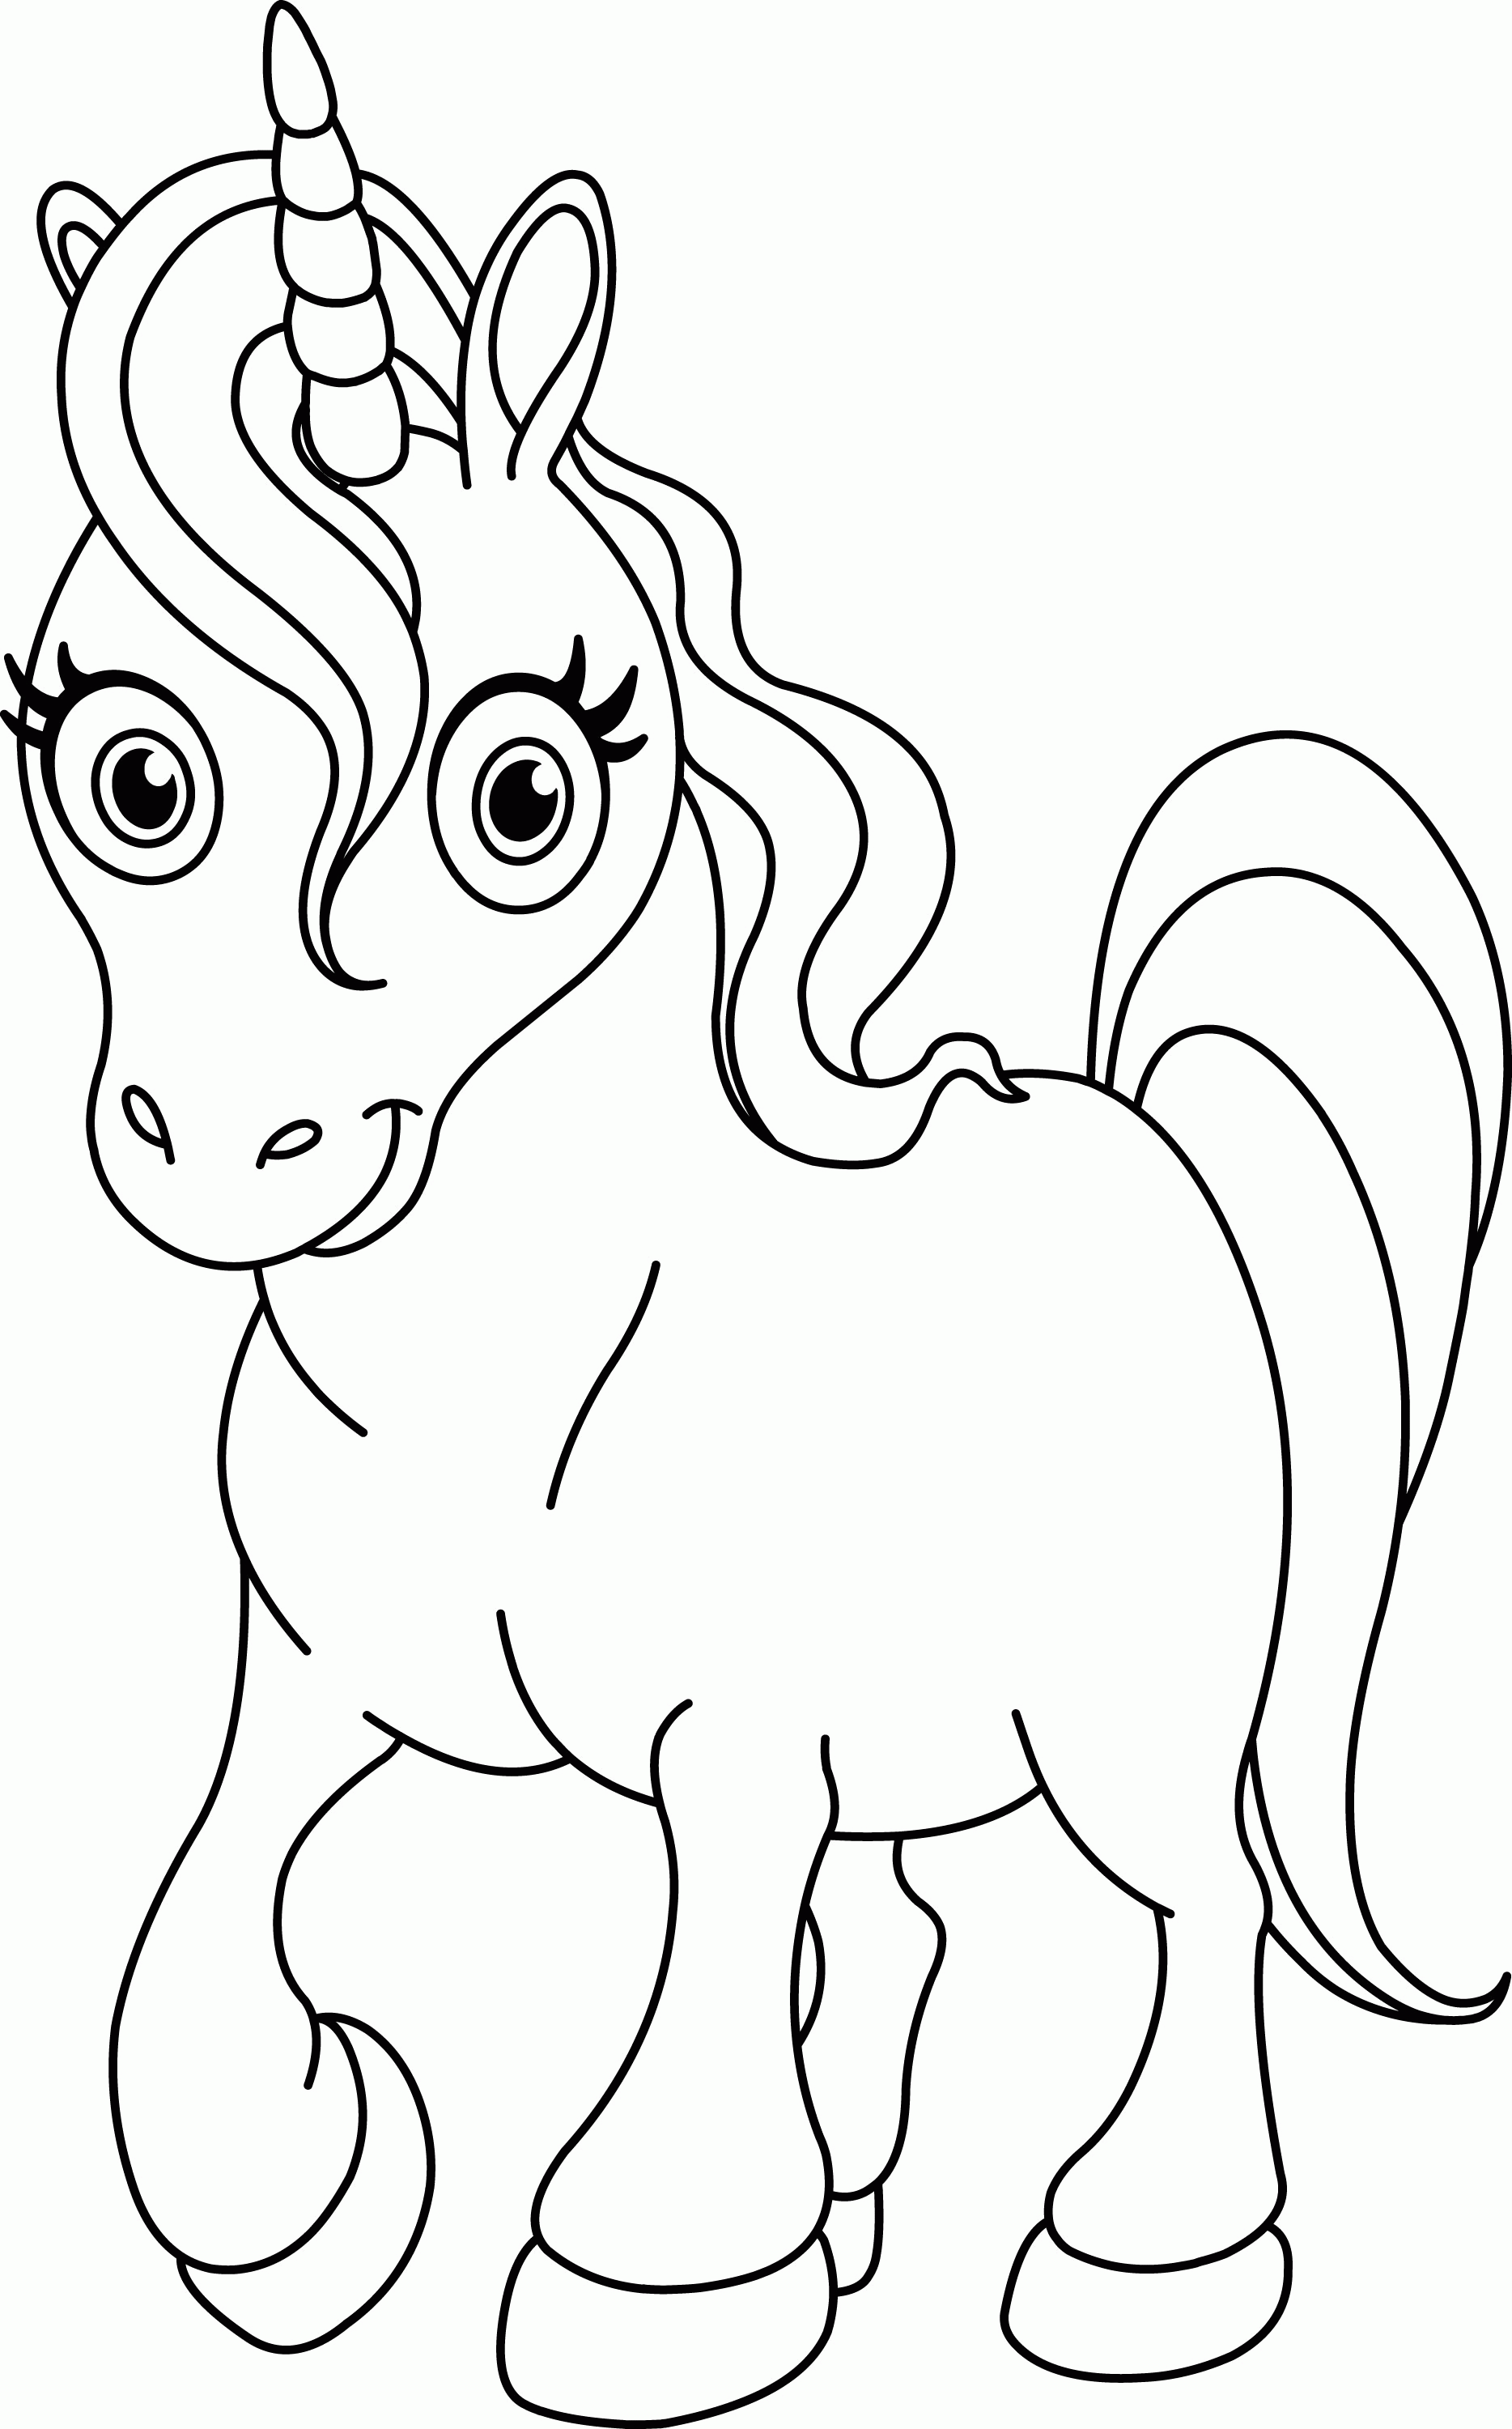 unicorn coloring pages for kids - VoteForVerde.com